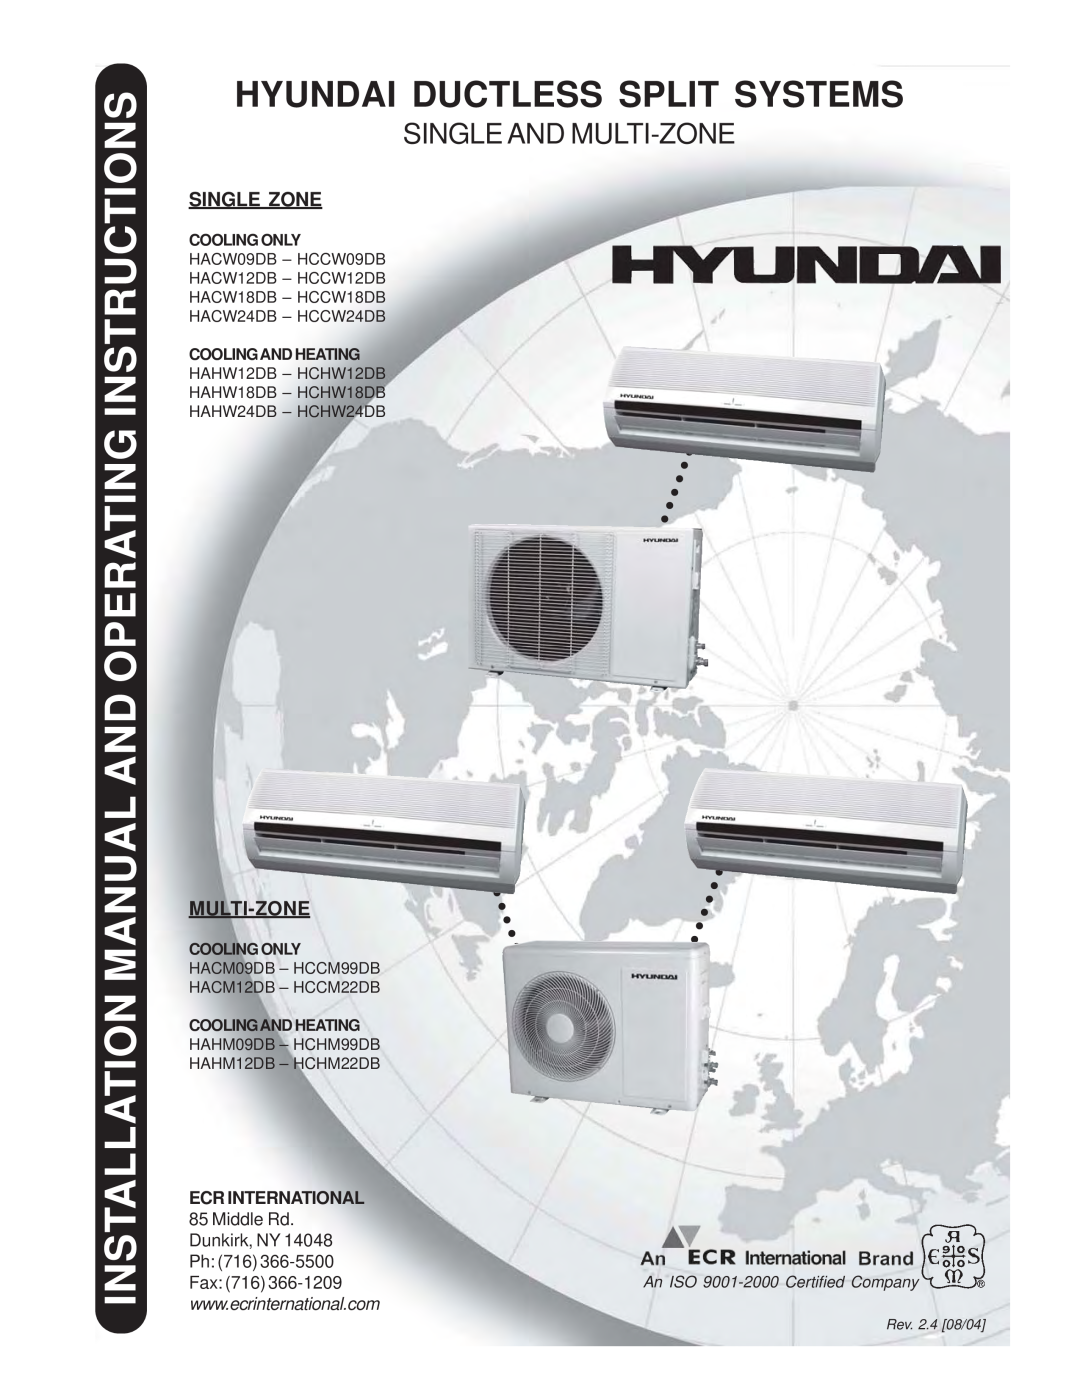 Hyundai HAHM09DB - HCHM99DB installation manual Single Zone, Multi-Zone, Ecr International, Hyundai Ductless Split Systems 